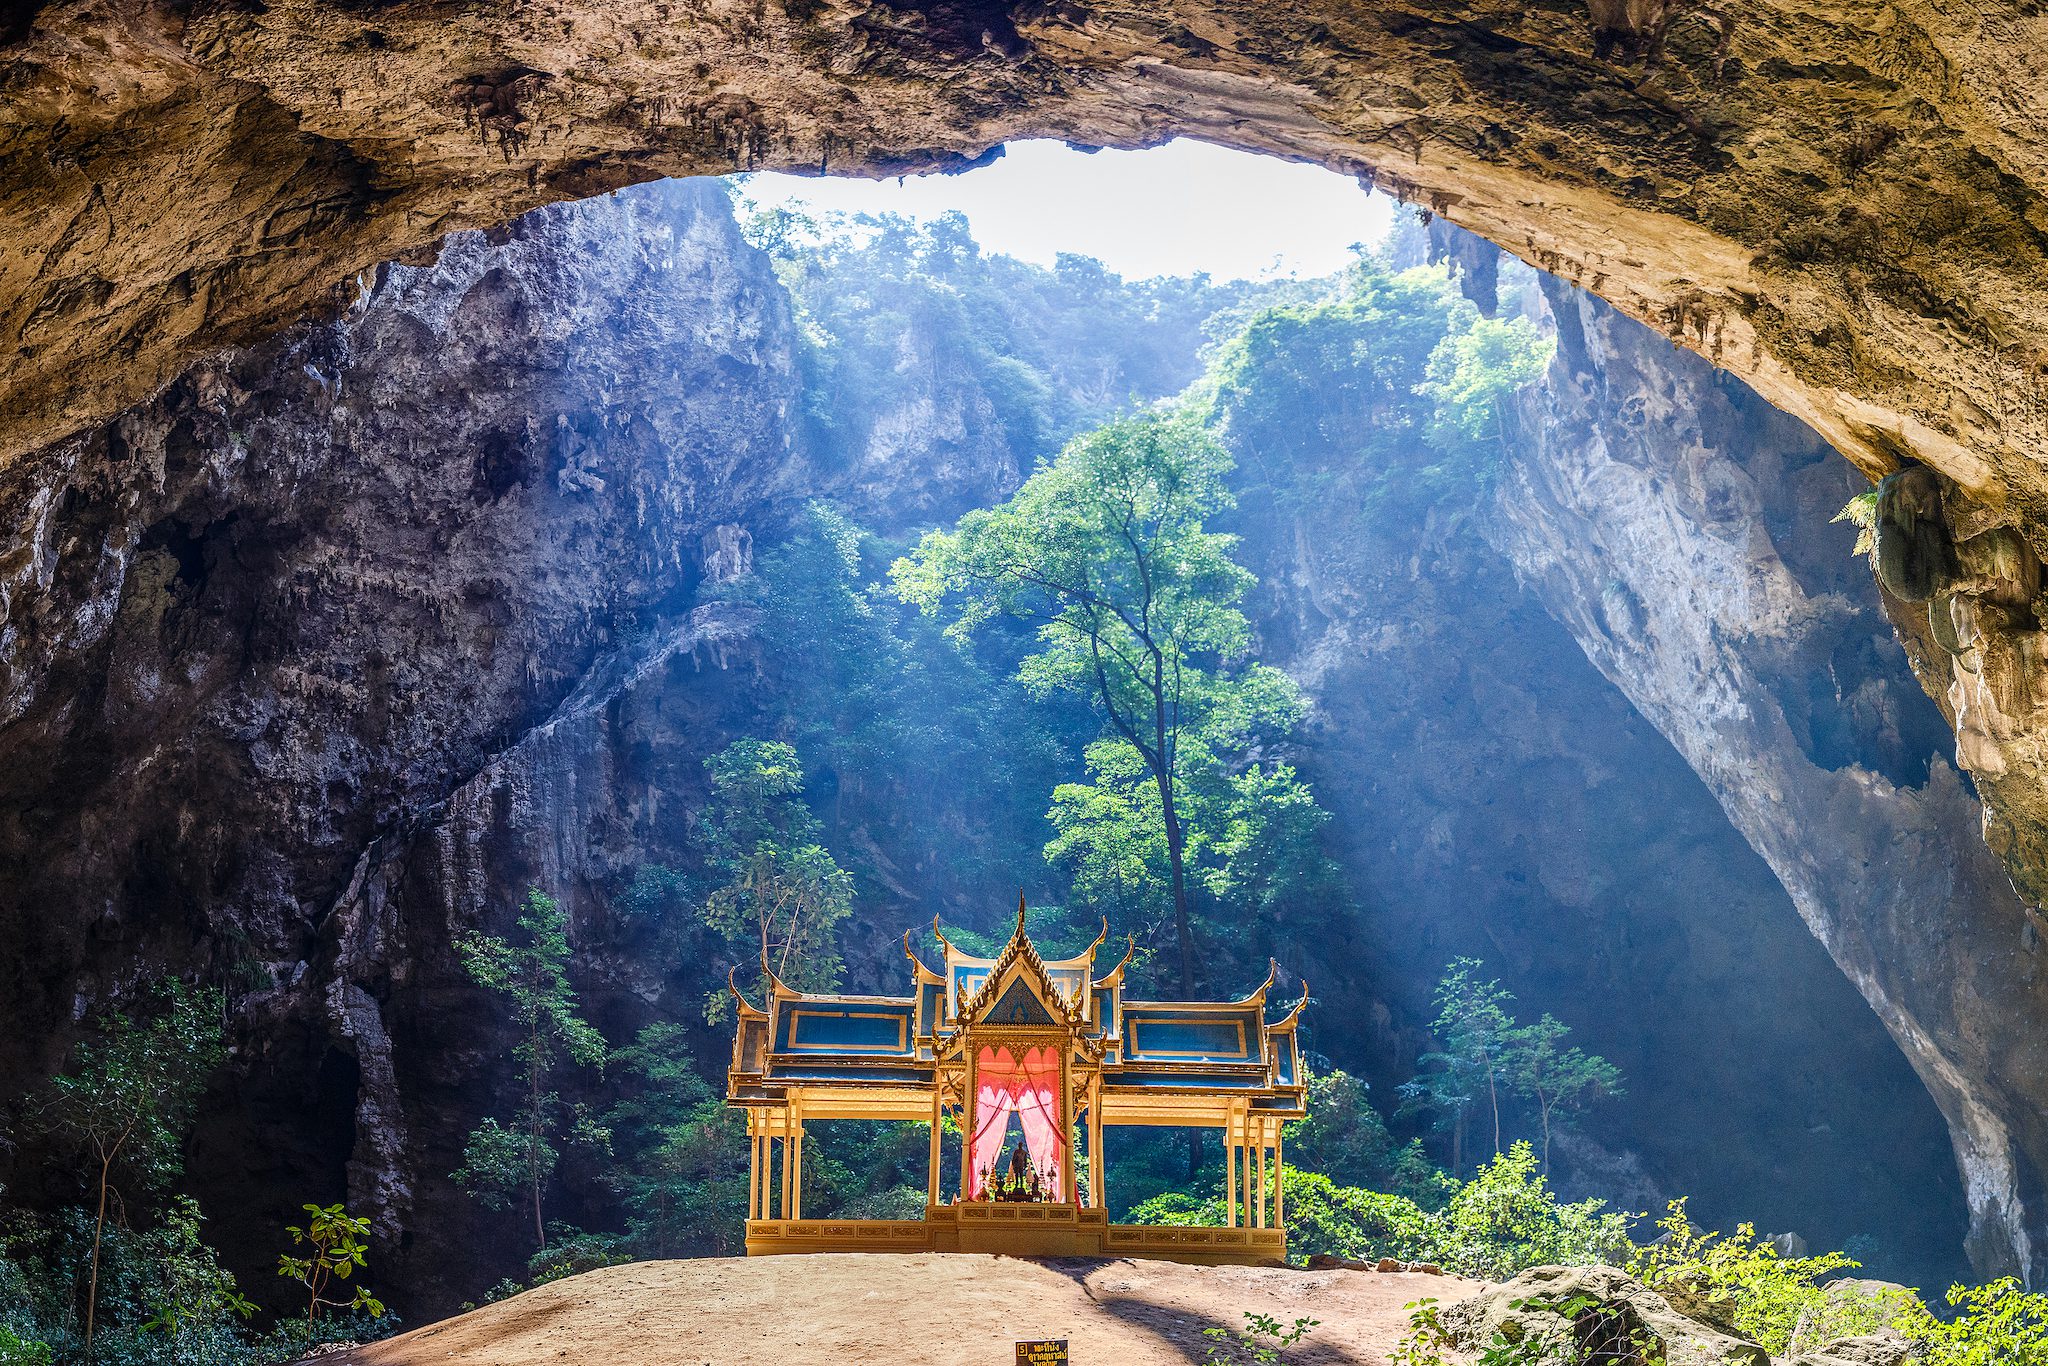 Phraya Nakhon Cave Thailand